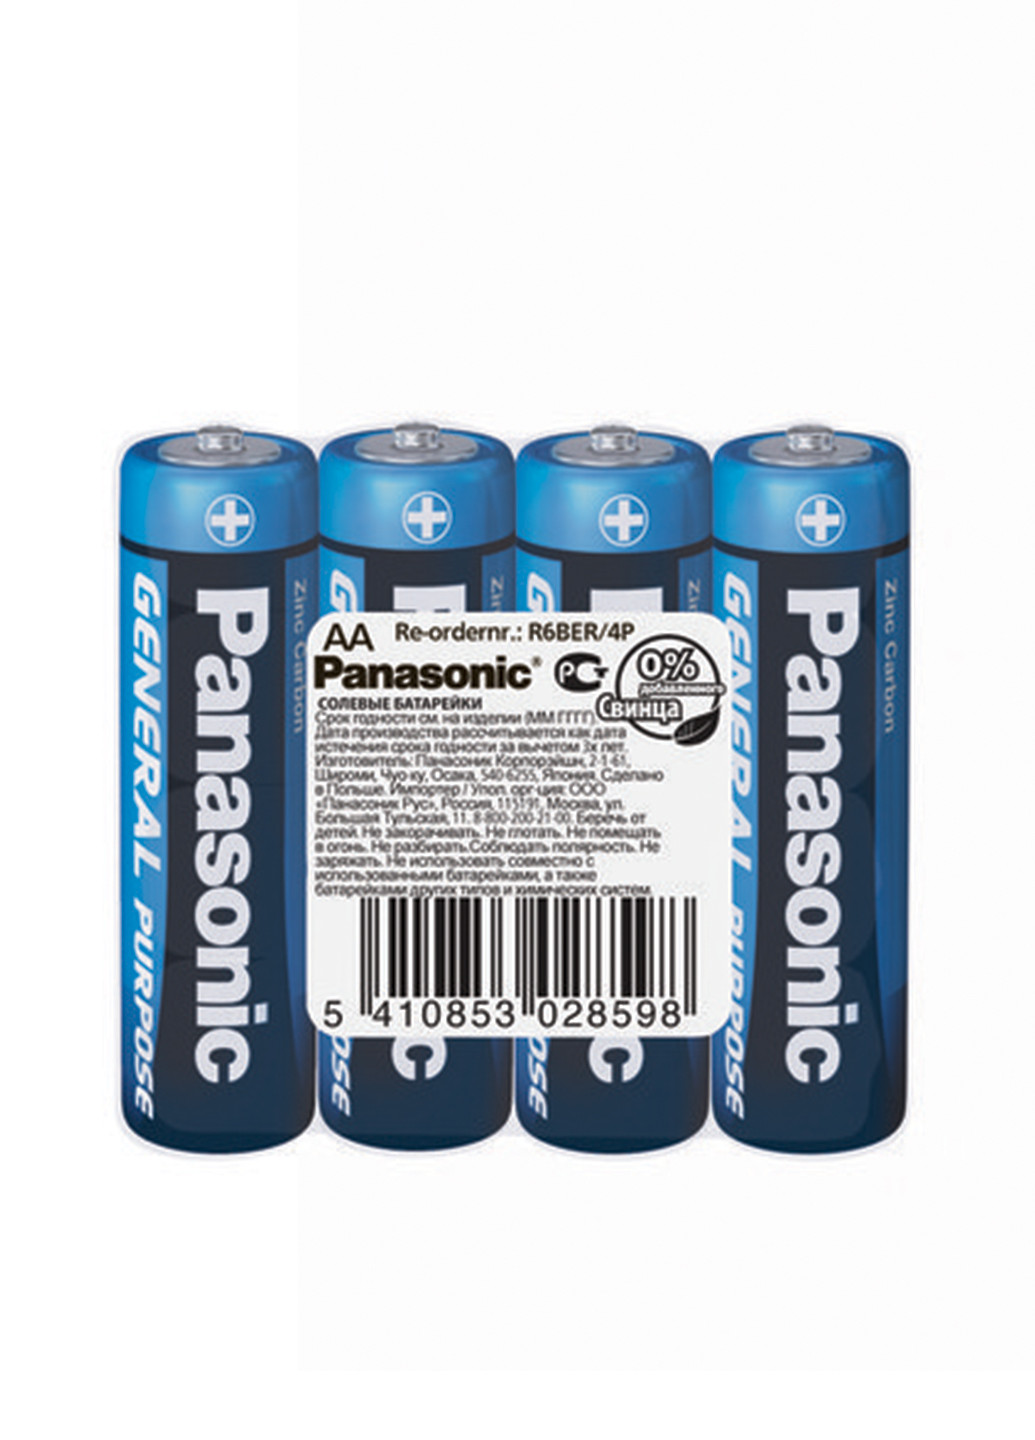 Батарейка Panasonic GENERAL PURPOSE R6 TRAY 4 ZINK-CARBON (R6BER/4P) синие